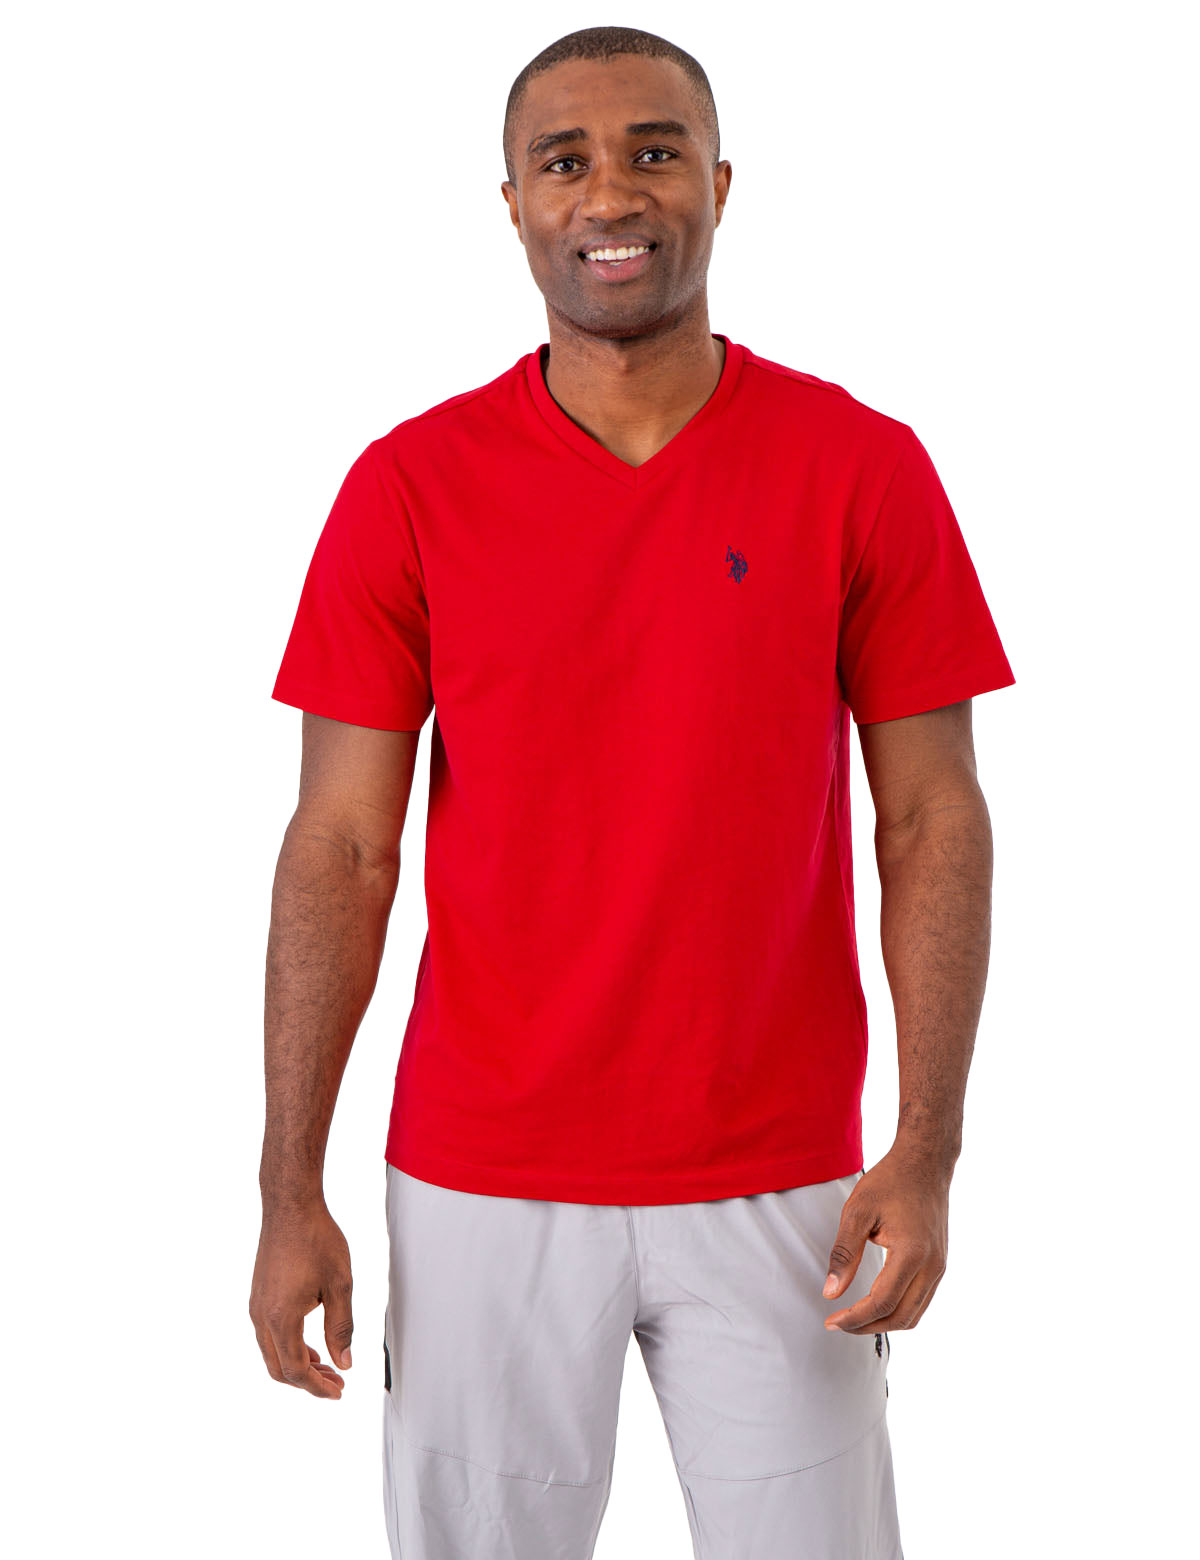 U.S. Polo Assn. Men's V-Neck T-Shirt - image 2 of 4